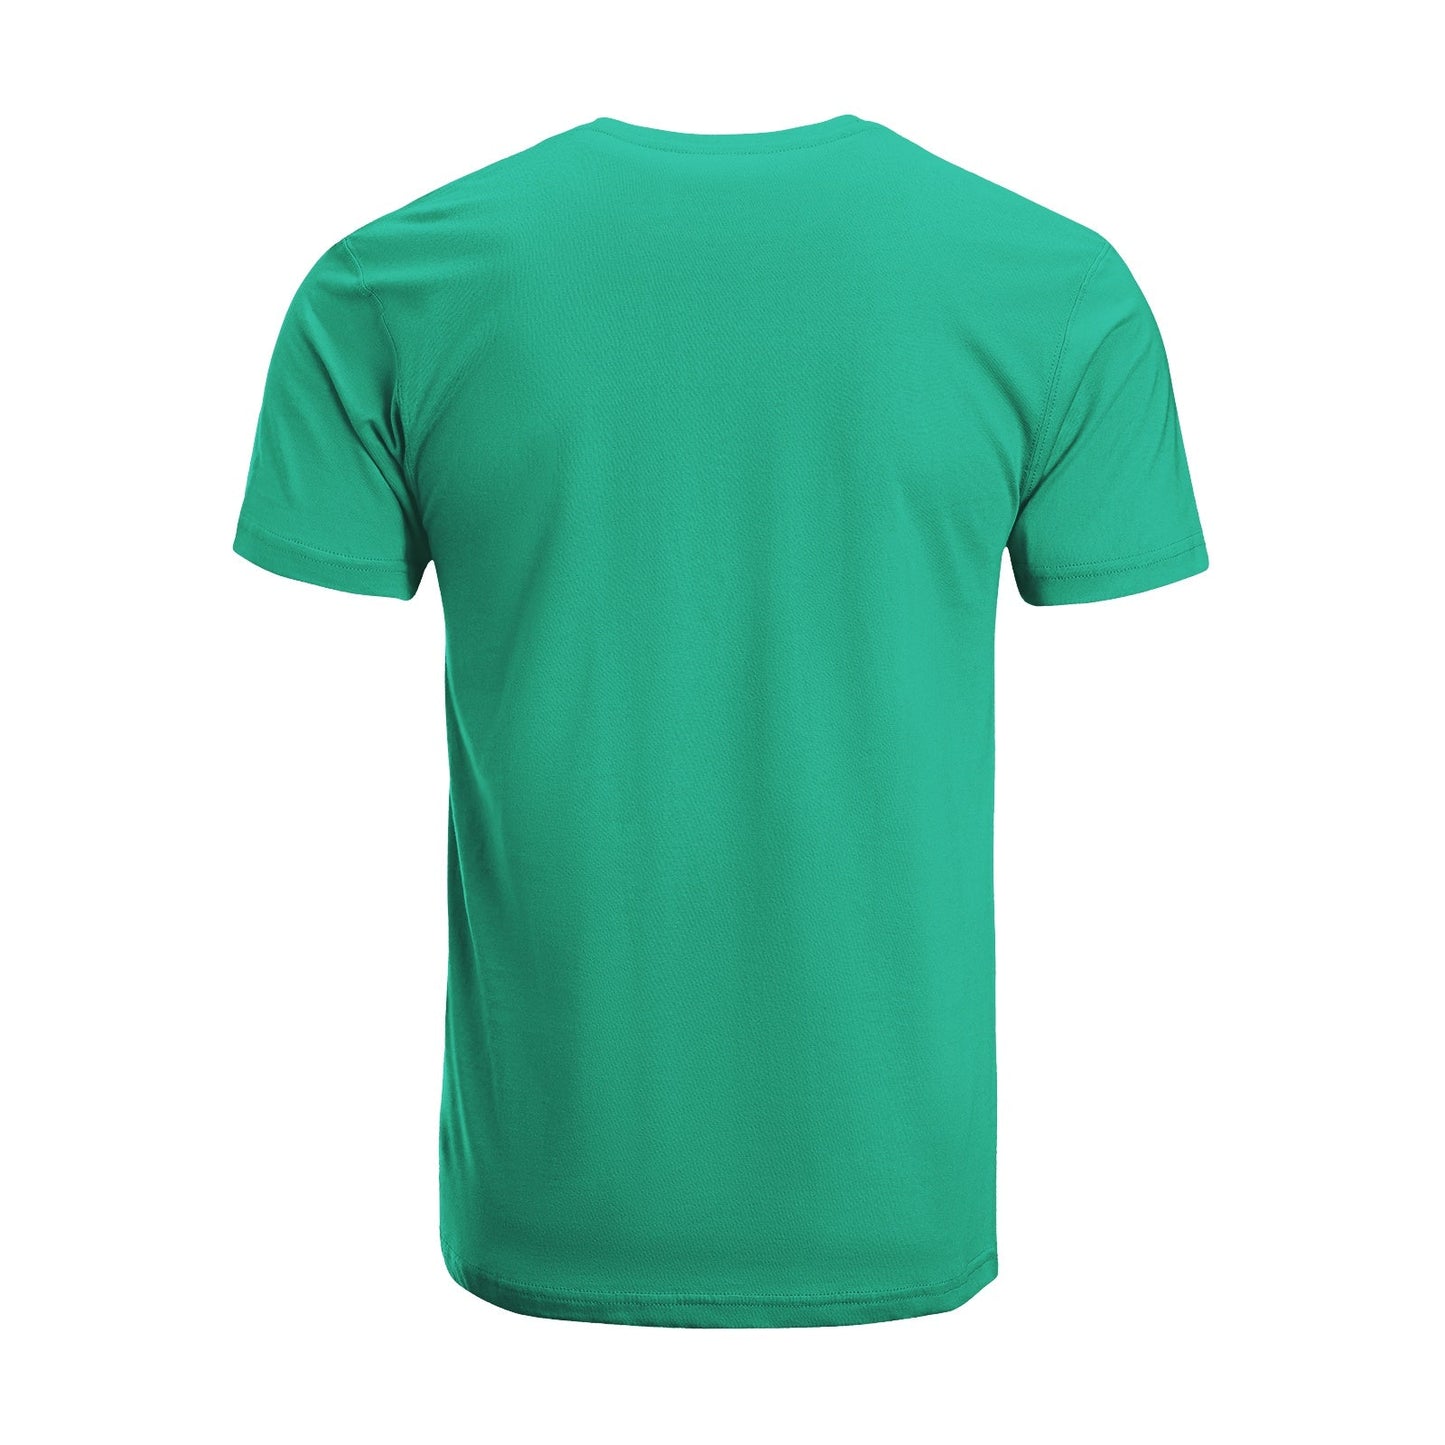 Unisex Short Sleeve Crew Neck Cotton Jersey T-Shirt USA 13